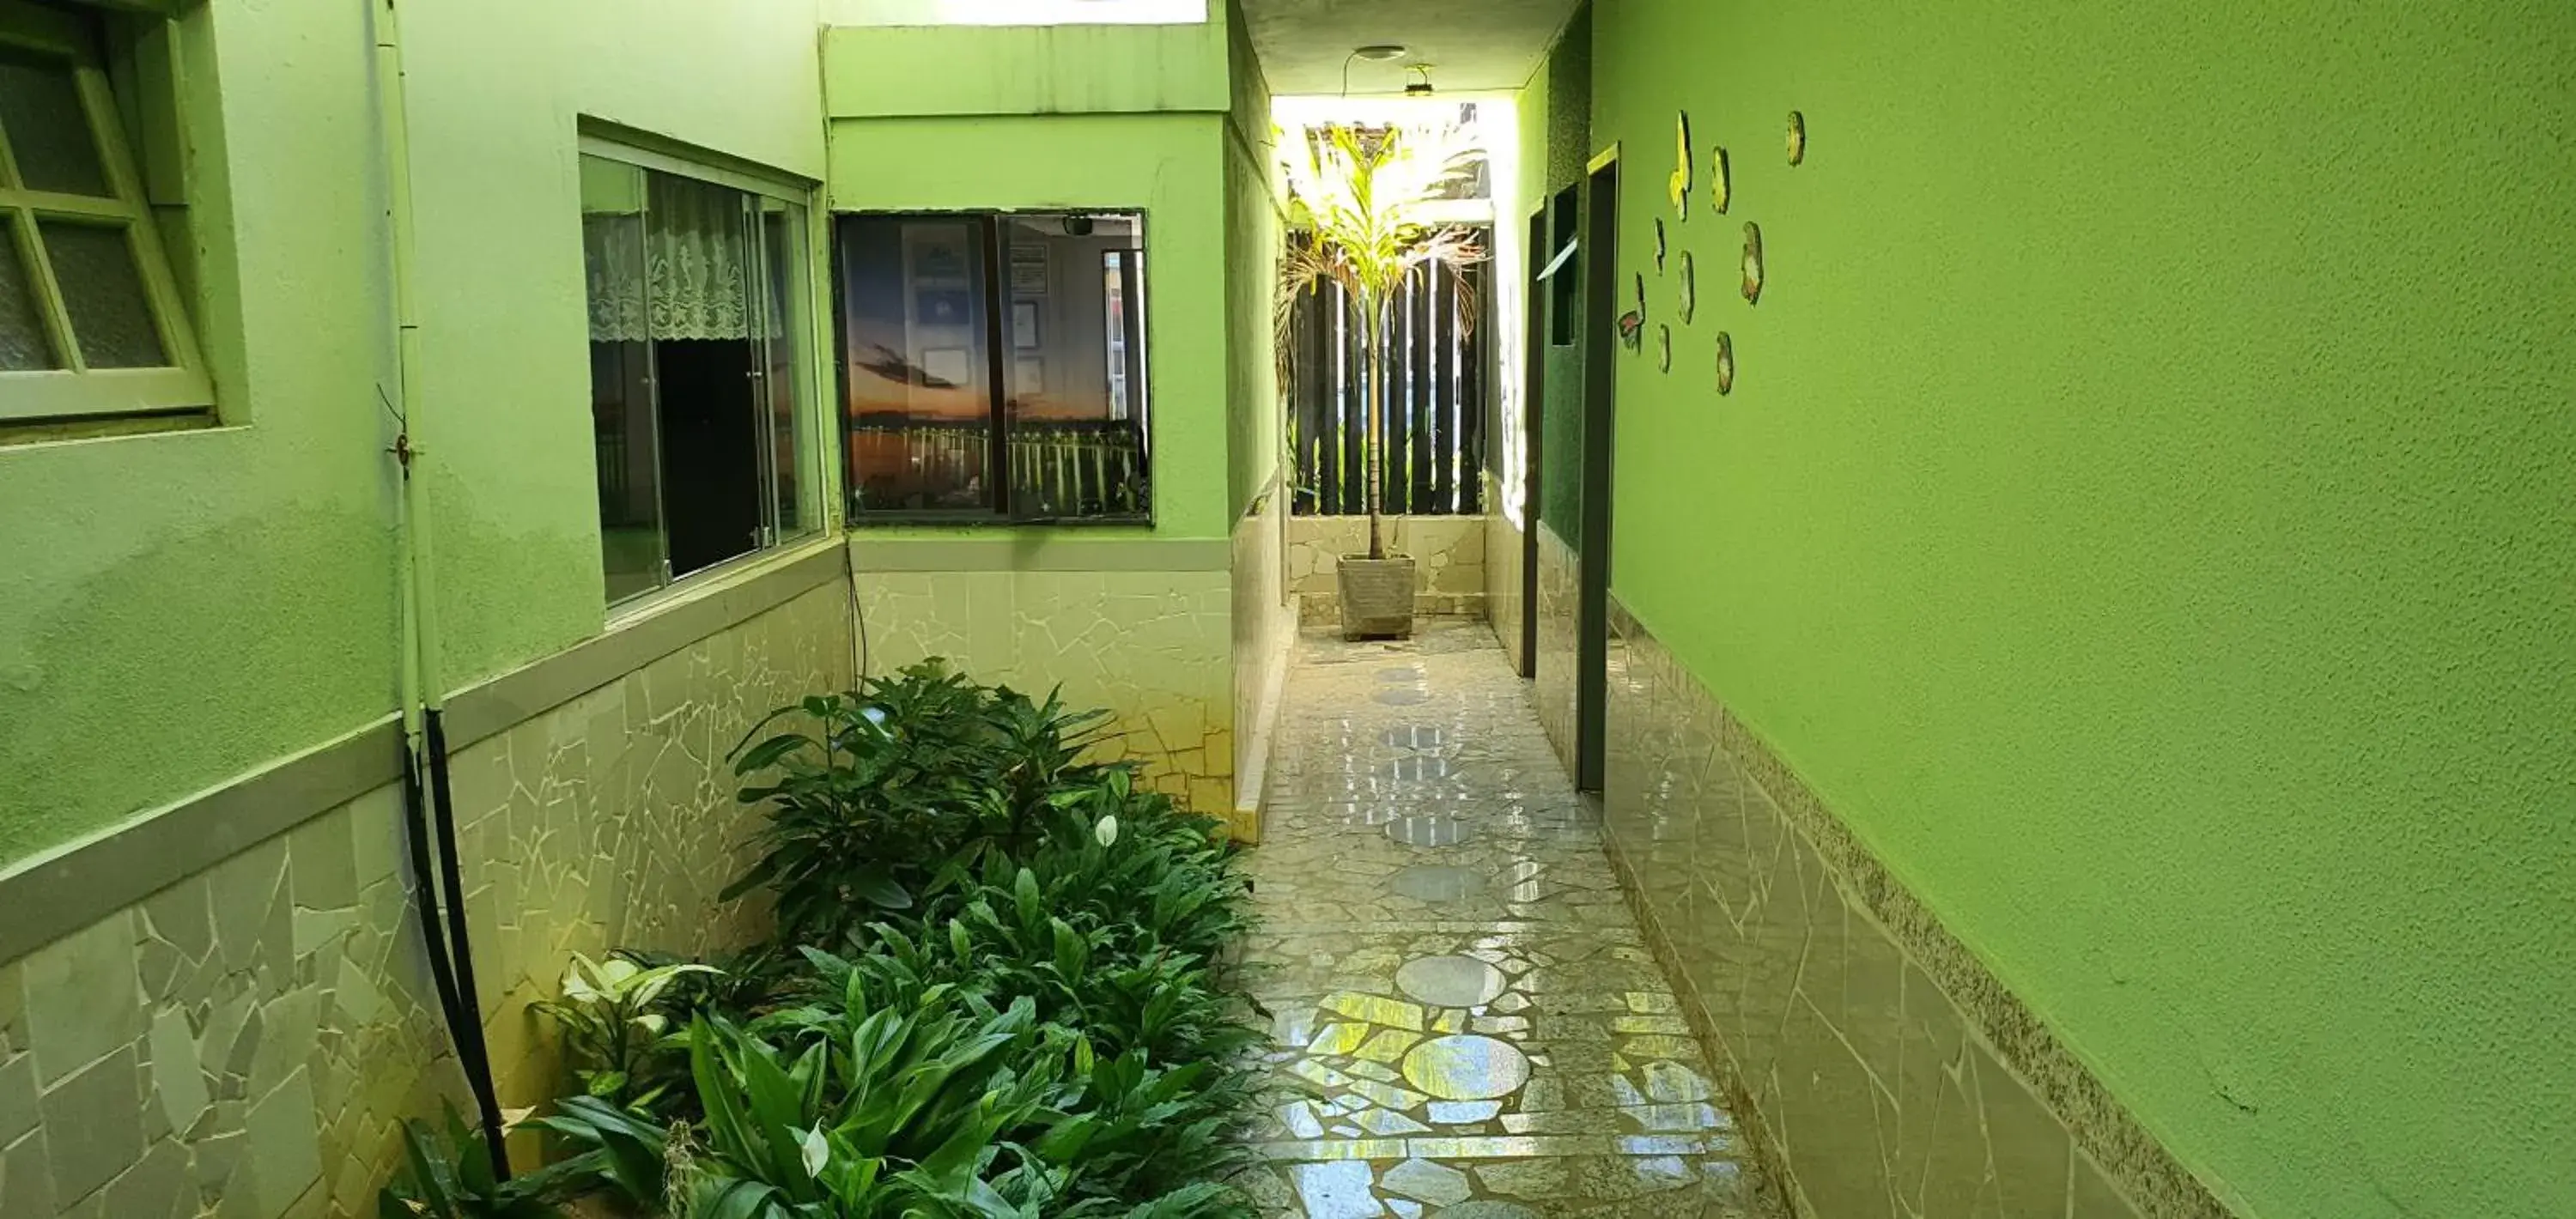 Area and facilities in Duas Praias Hotel Pousada